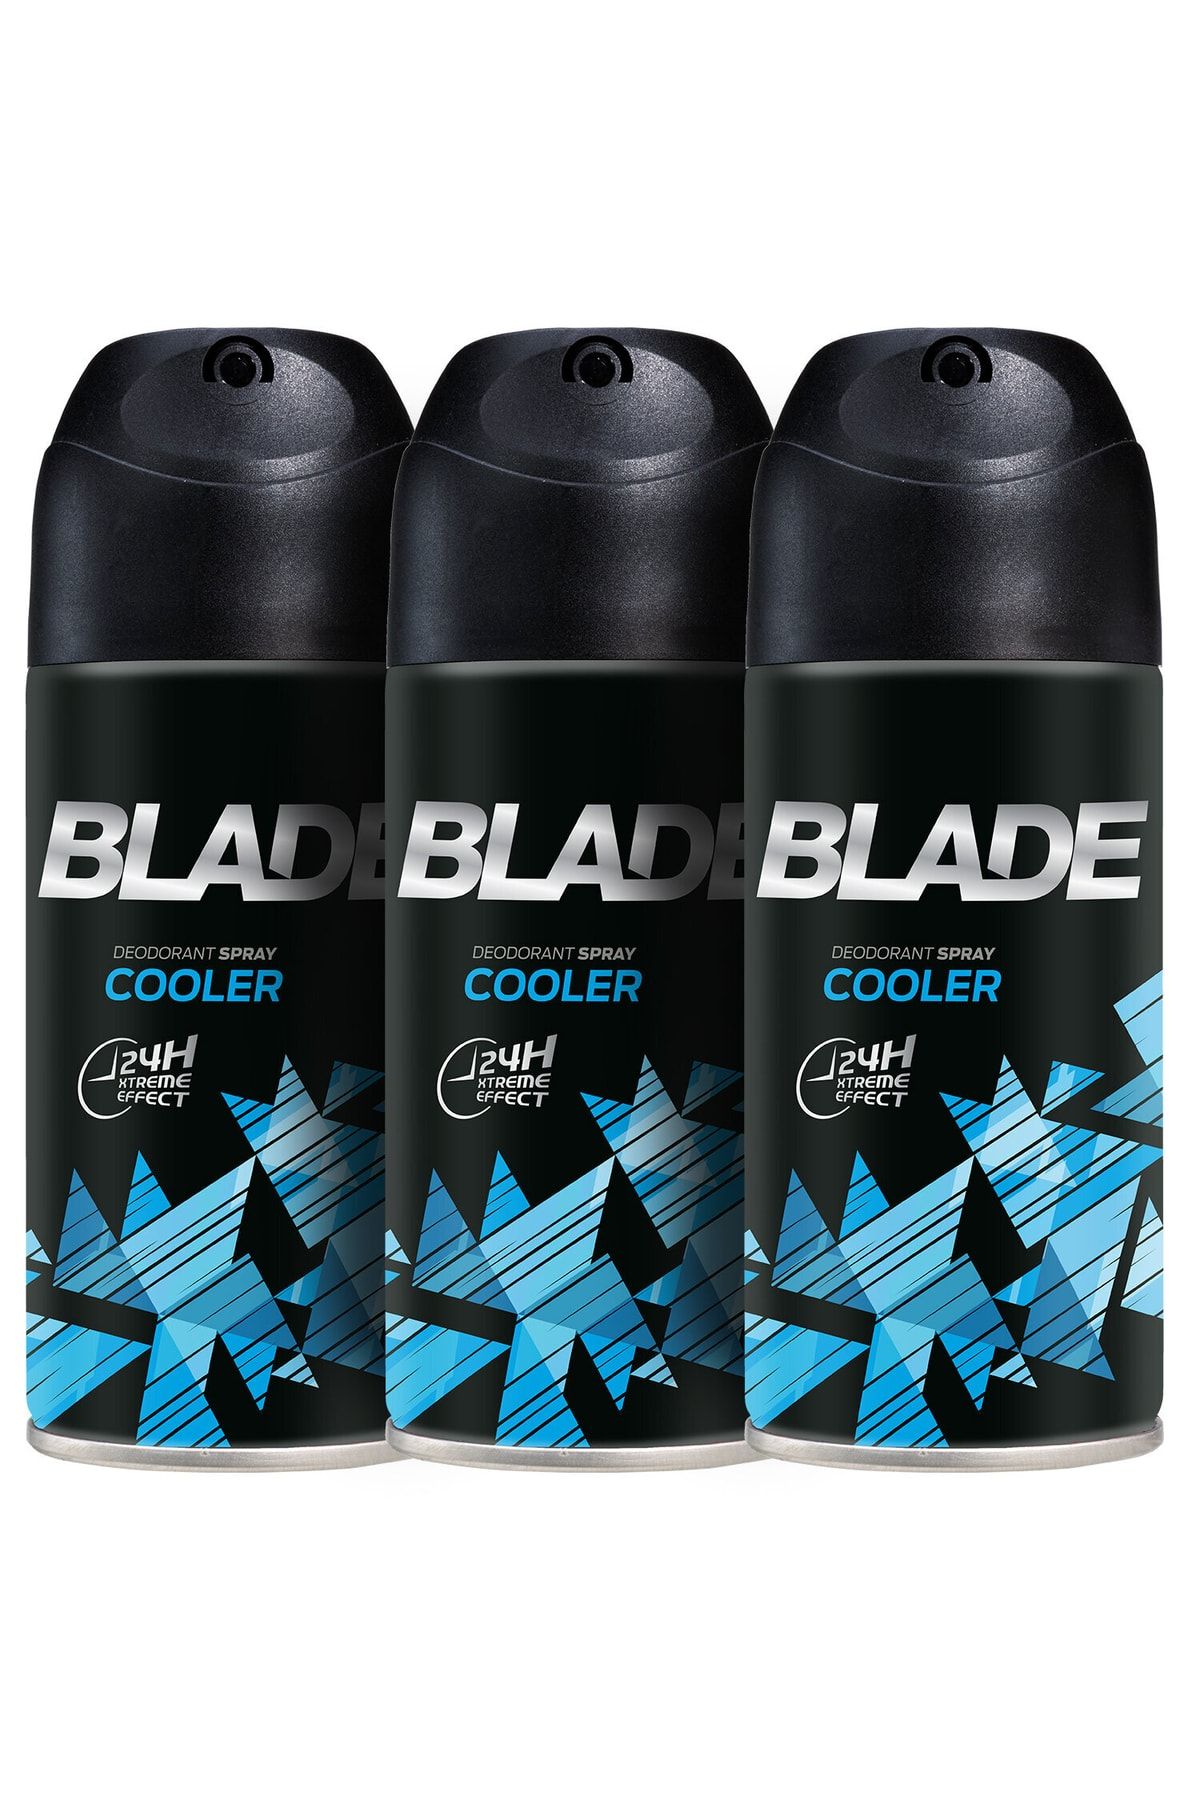 Arko Blade Cooler Erkek Deodorant 3x150ml